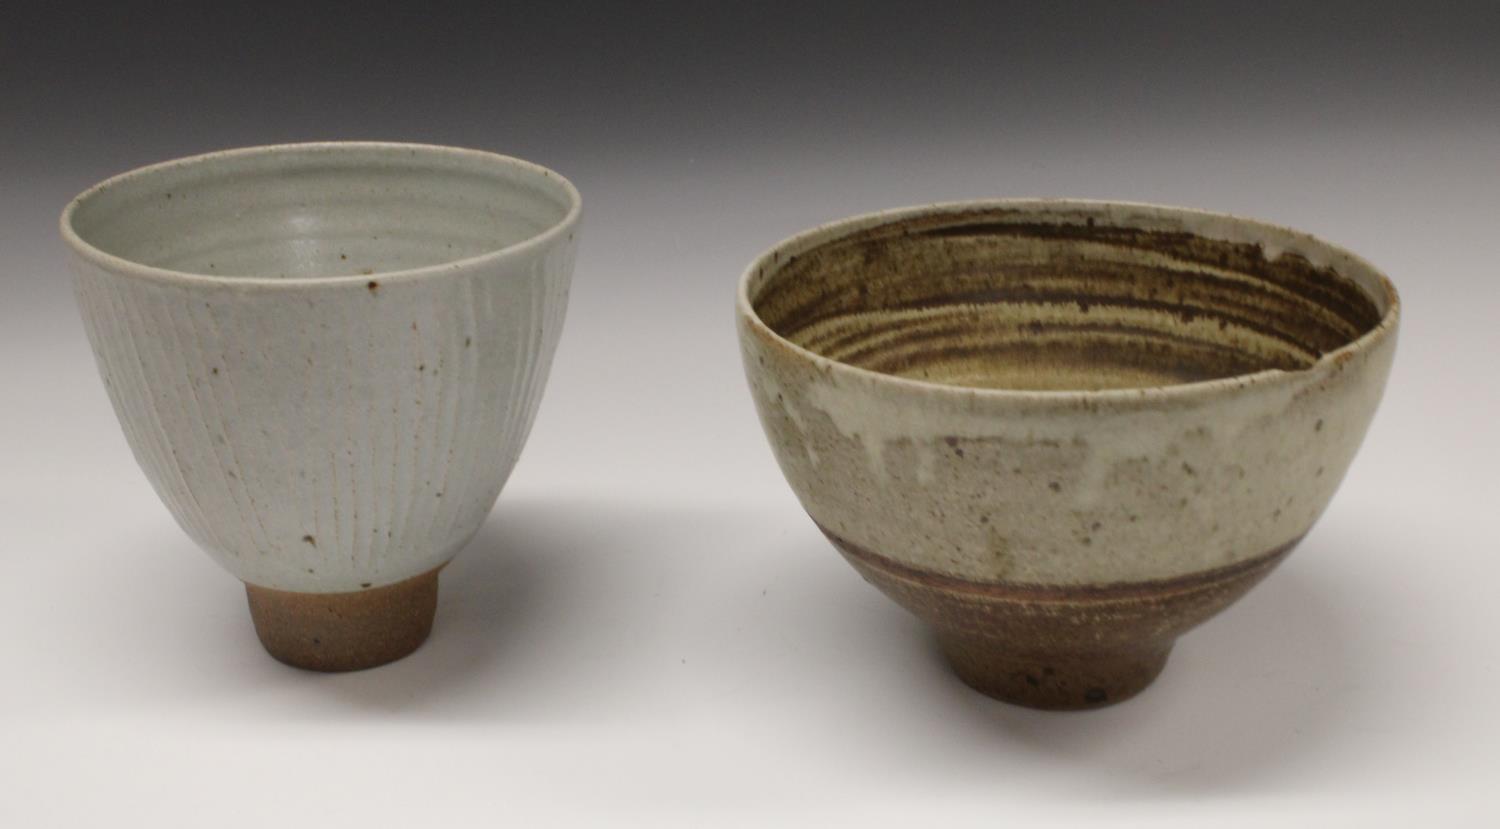 A Joanna Constantinidis style conical bowl, mottled grey glaze, 16.